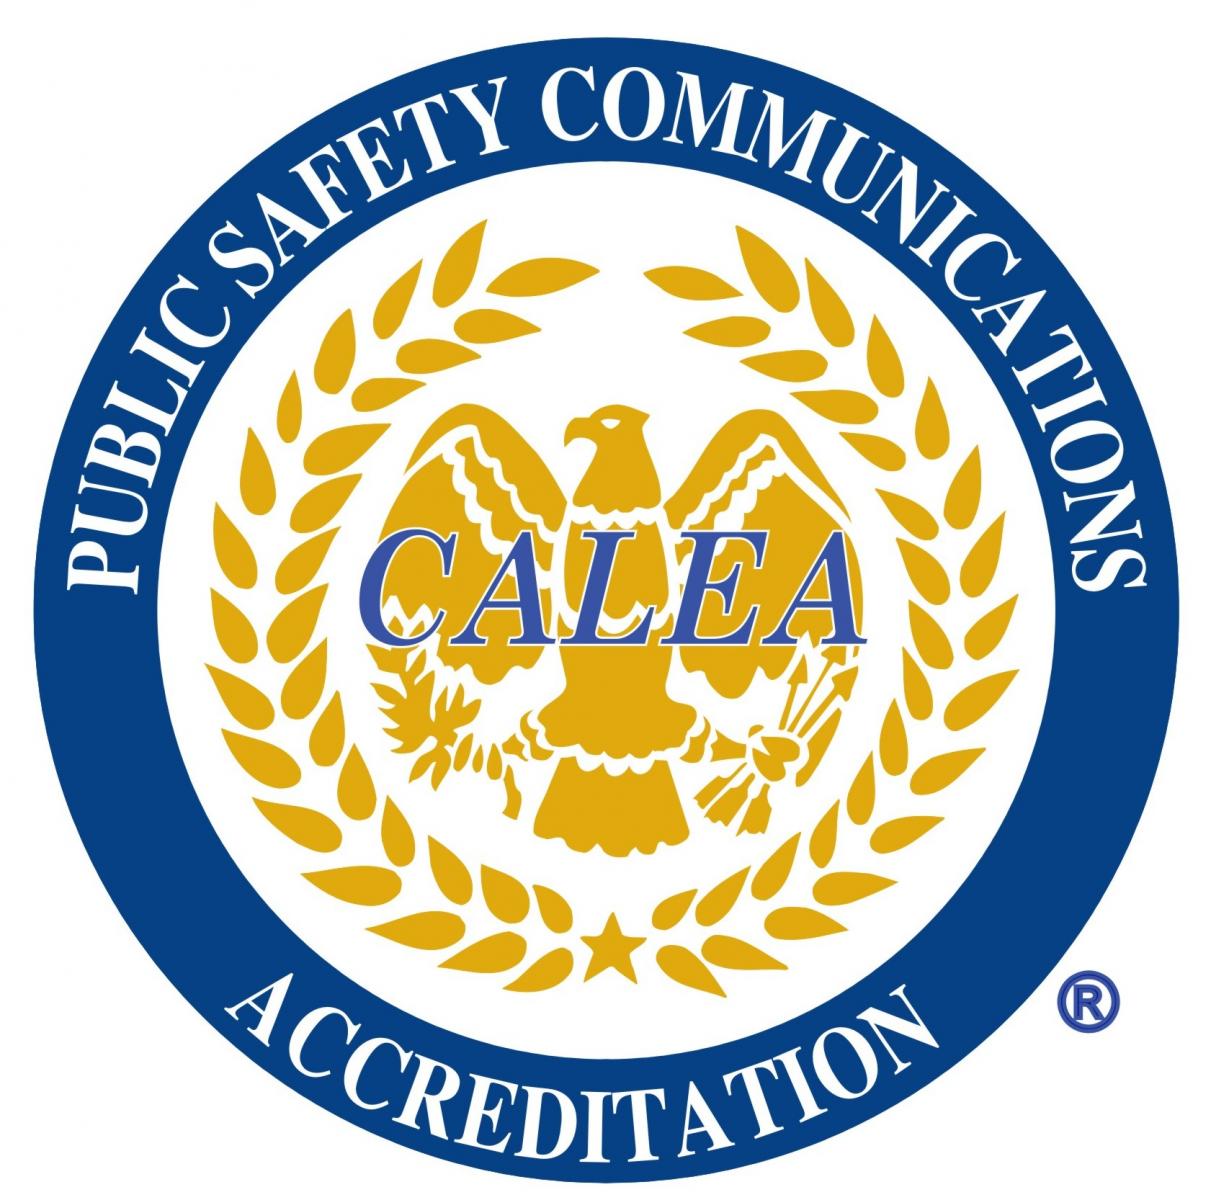 Public Safety Communications Accreditation 